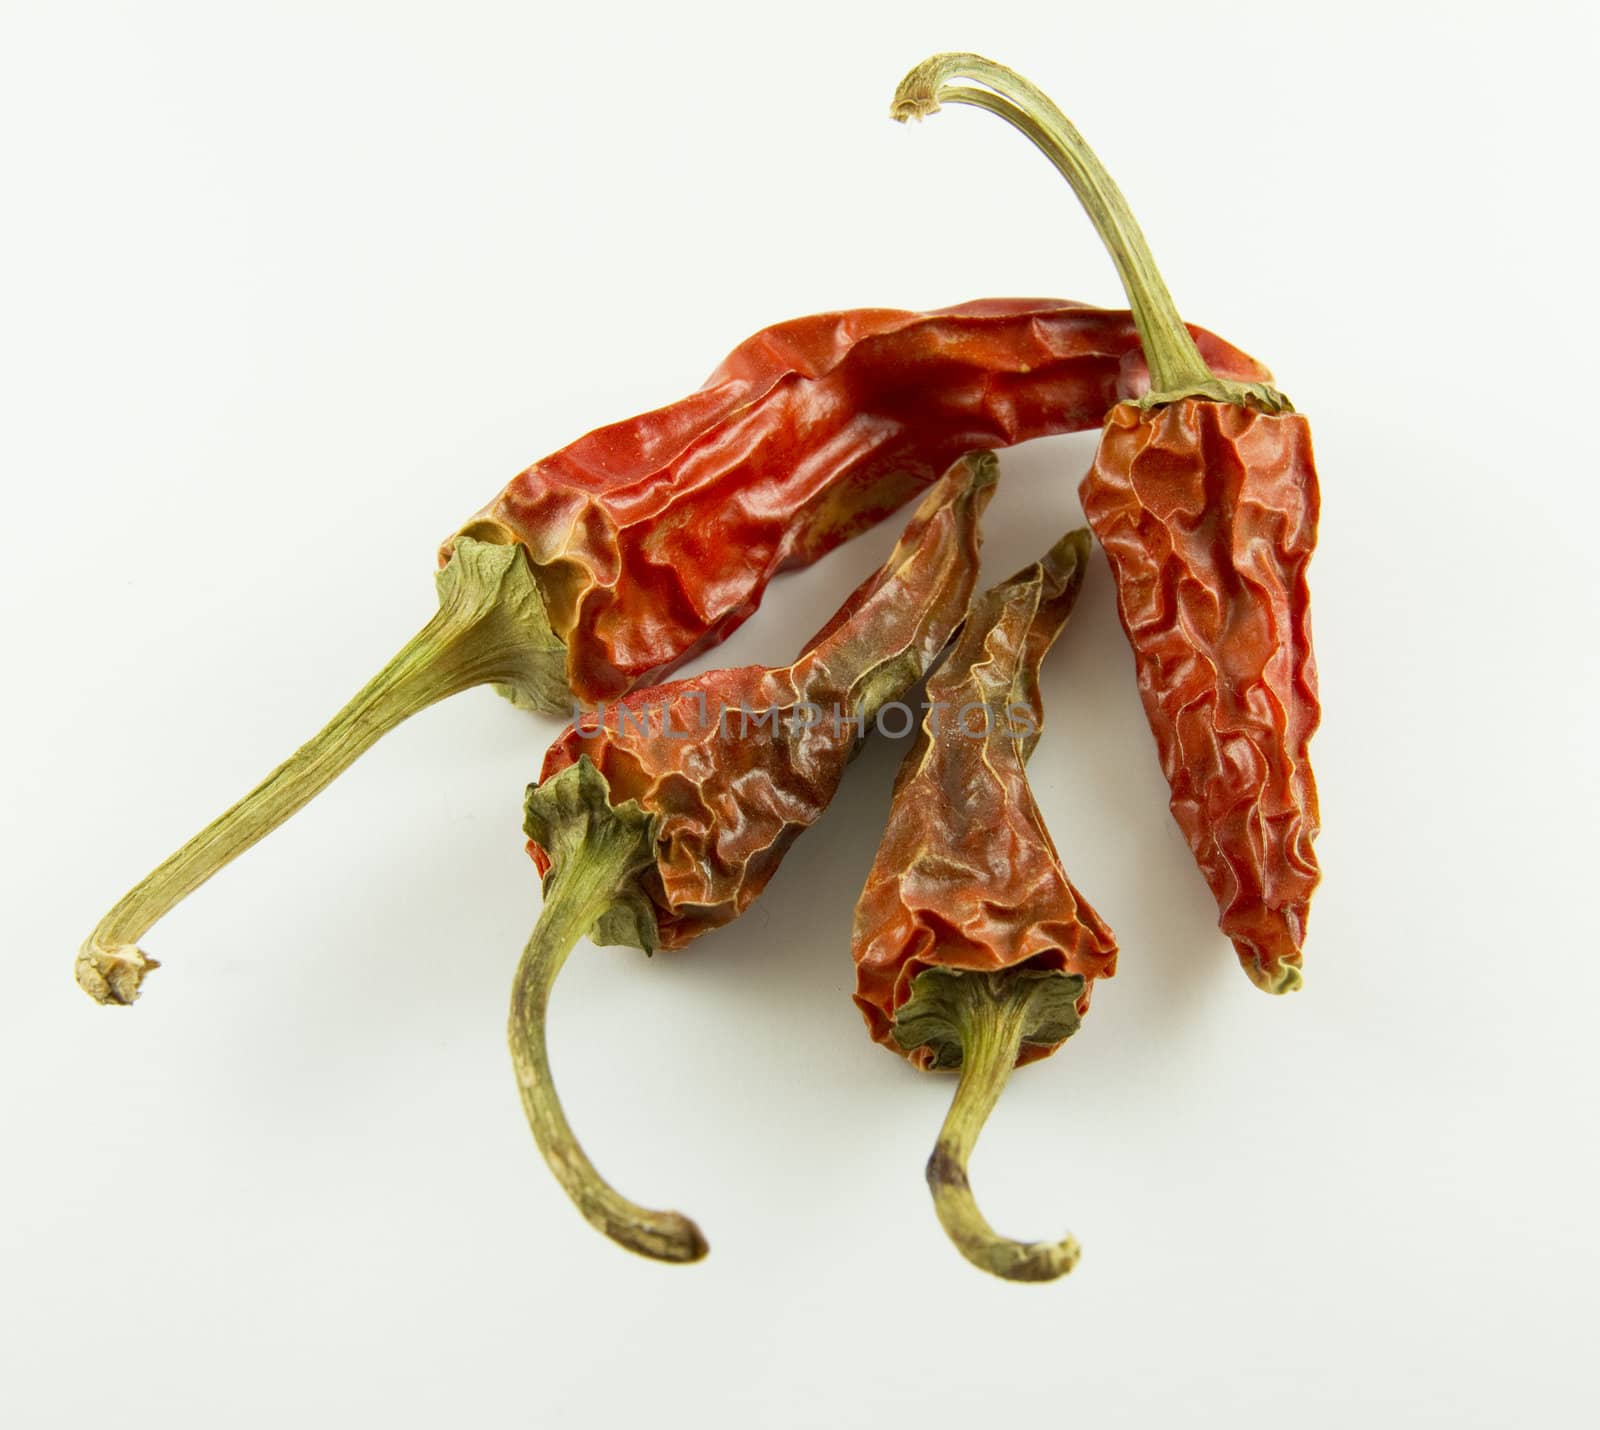 Dry peppers by Upsidedowncake